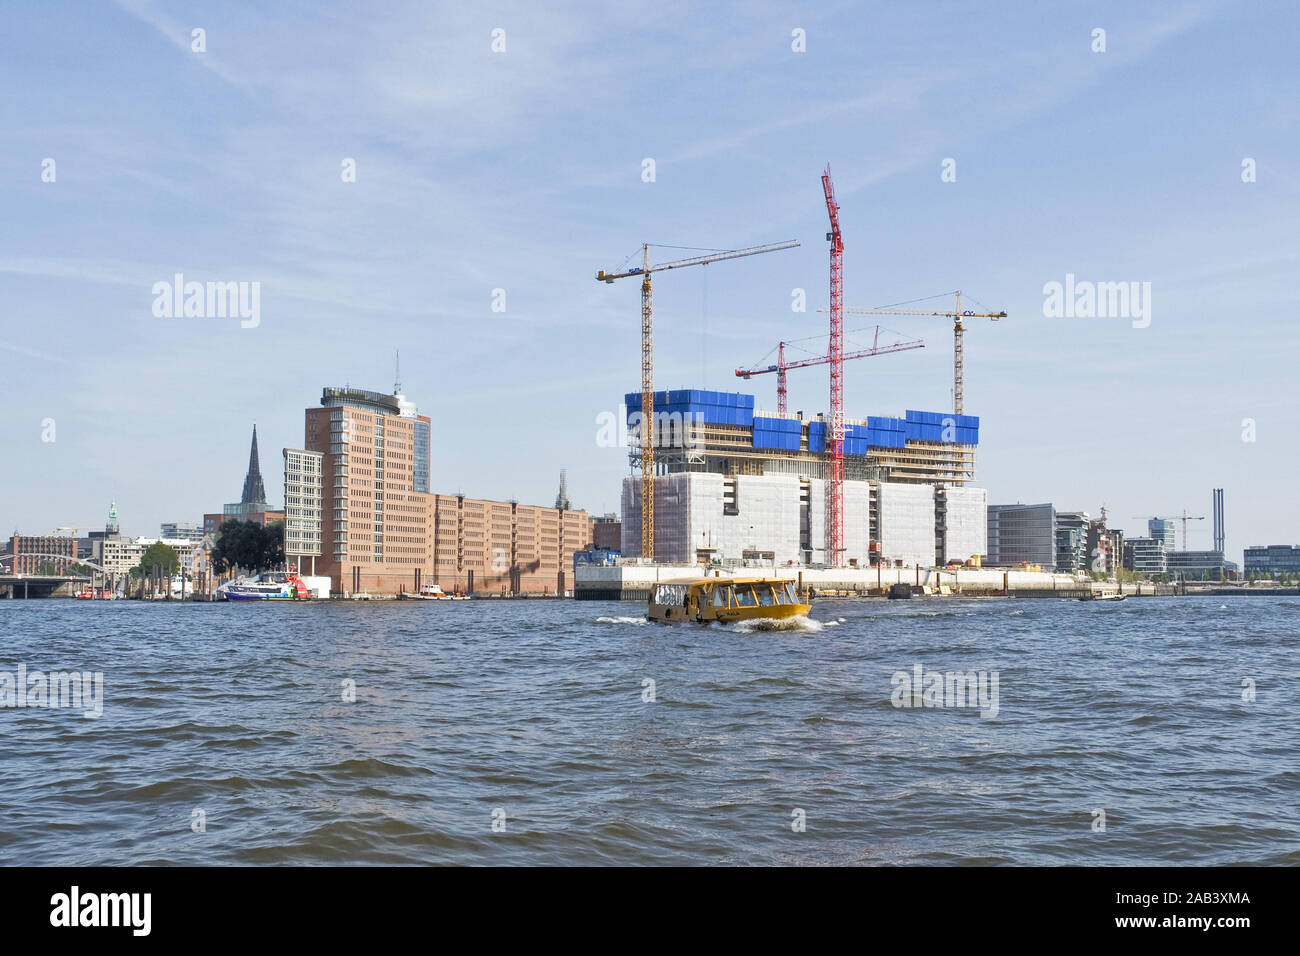 Blick auf die entstehende Elbphilharmonie im Hamburger Hafen |View of the emerging Elbe Philharmonic Hall in Hamburg harbor| Stock Photo